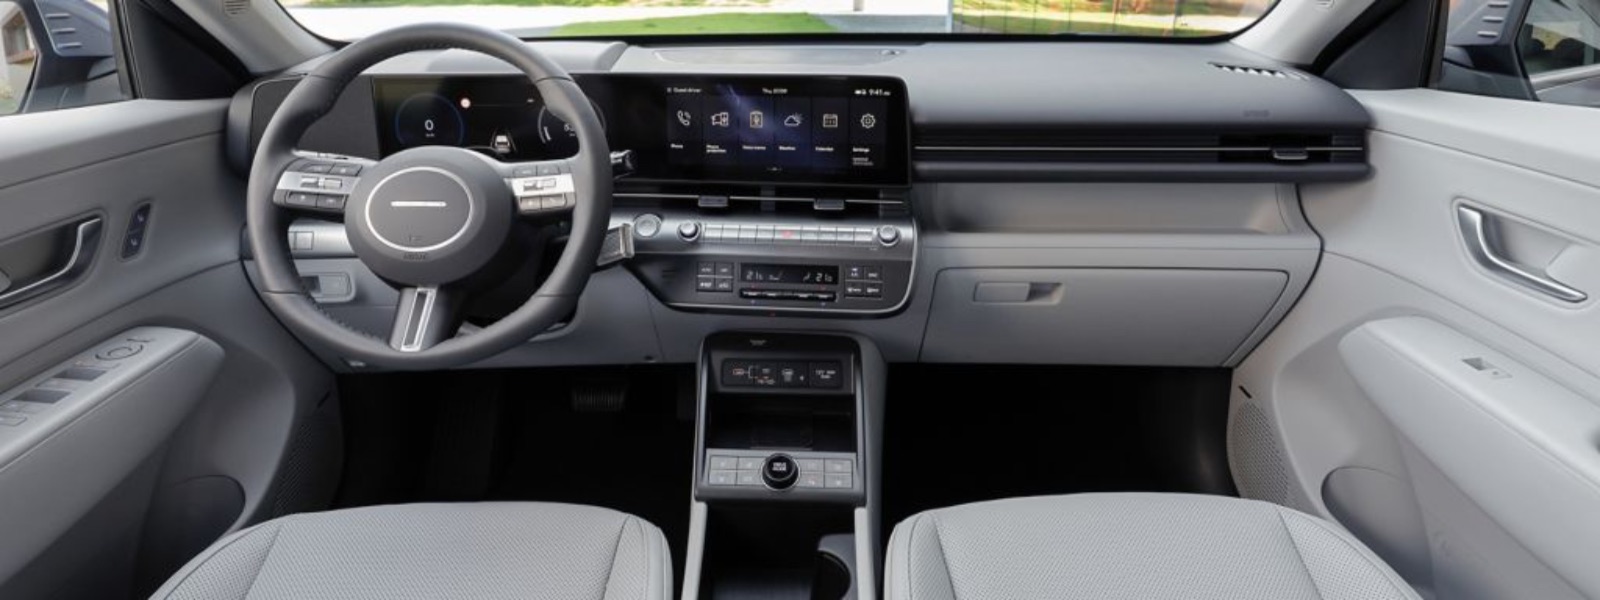 Hyundai nuova Kona interni modello elettrico 100%